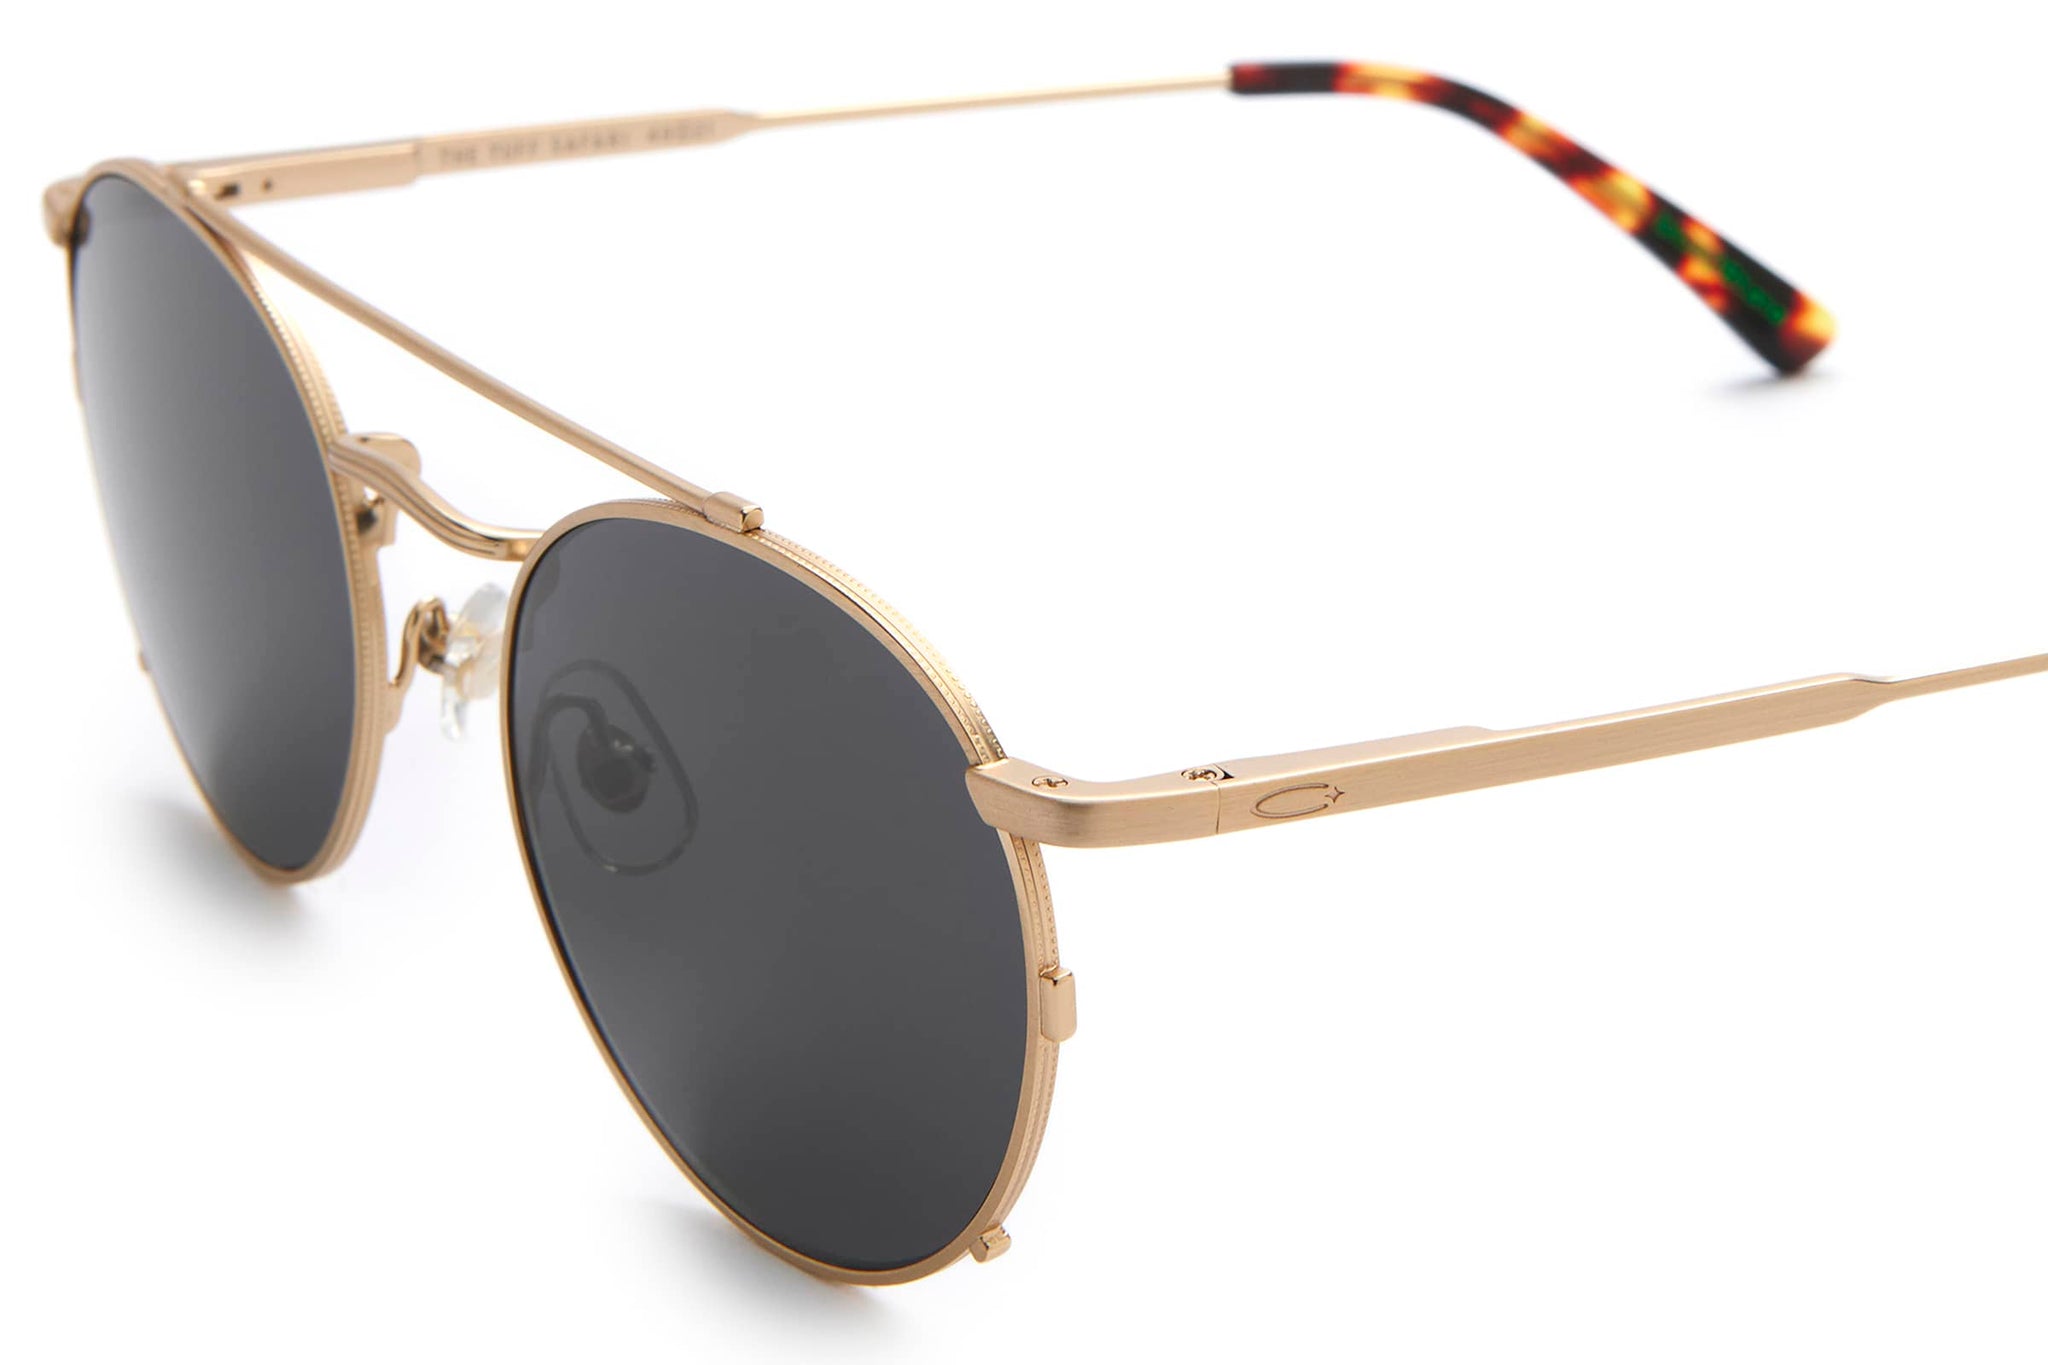 Crap® Eyewear | The Tuff Metal Crap Sunglasses Safari Eyewear – Polarized Gold